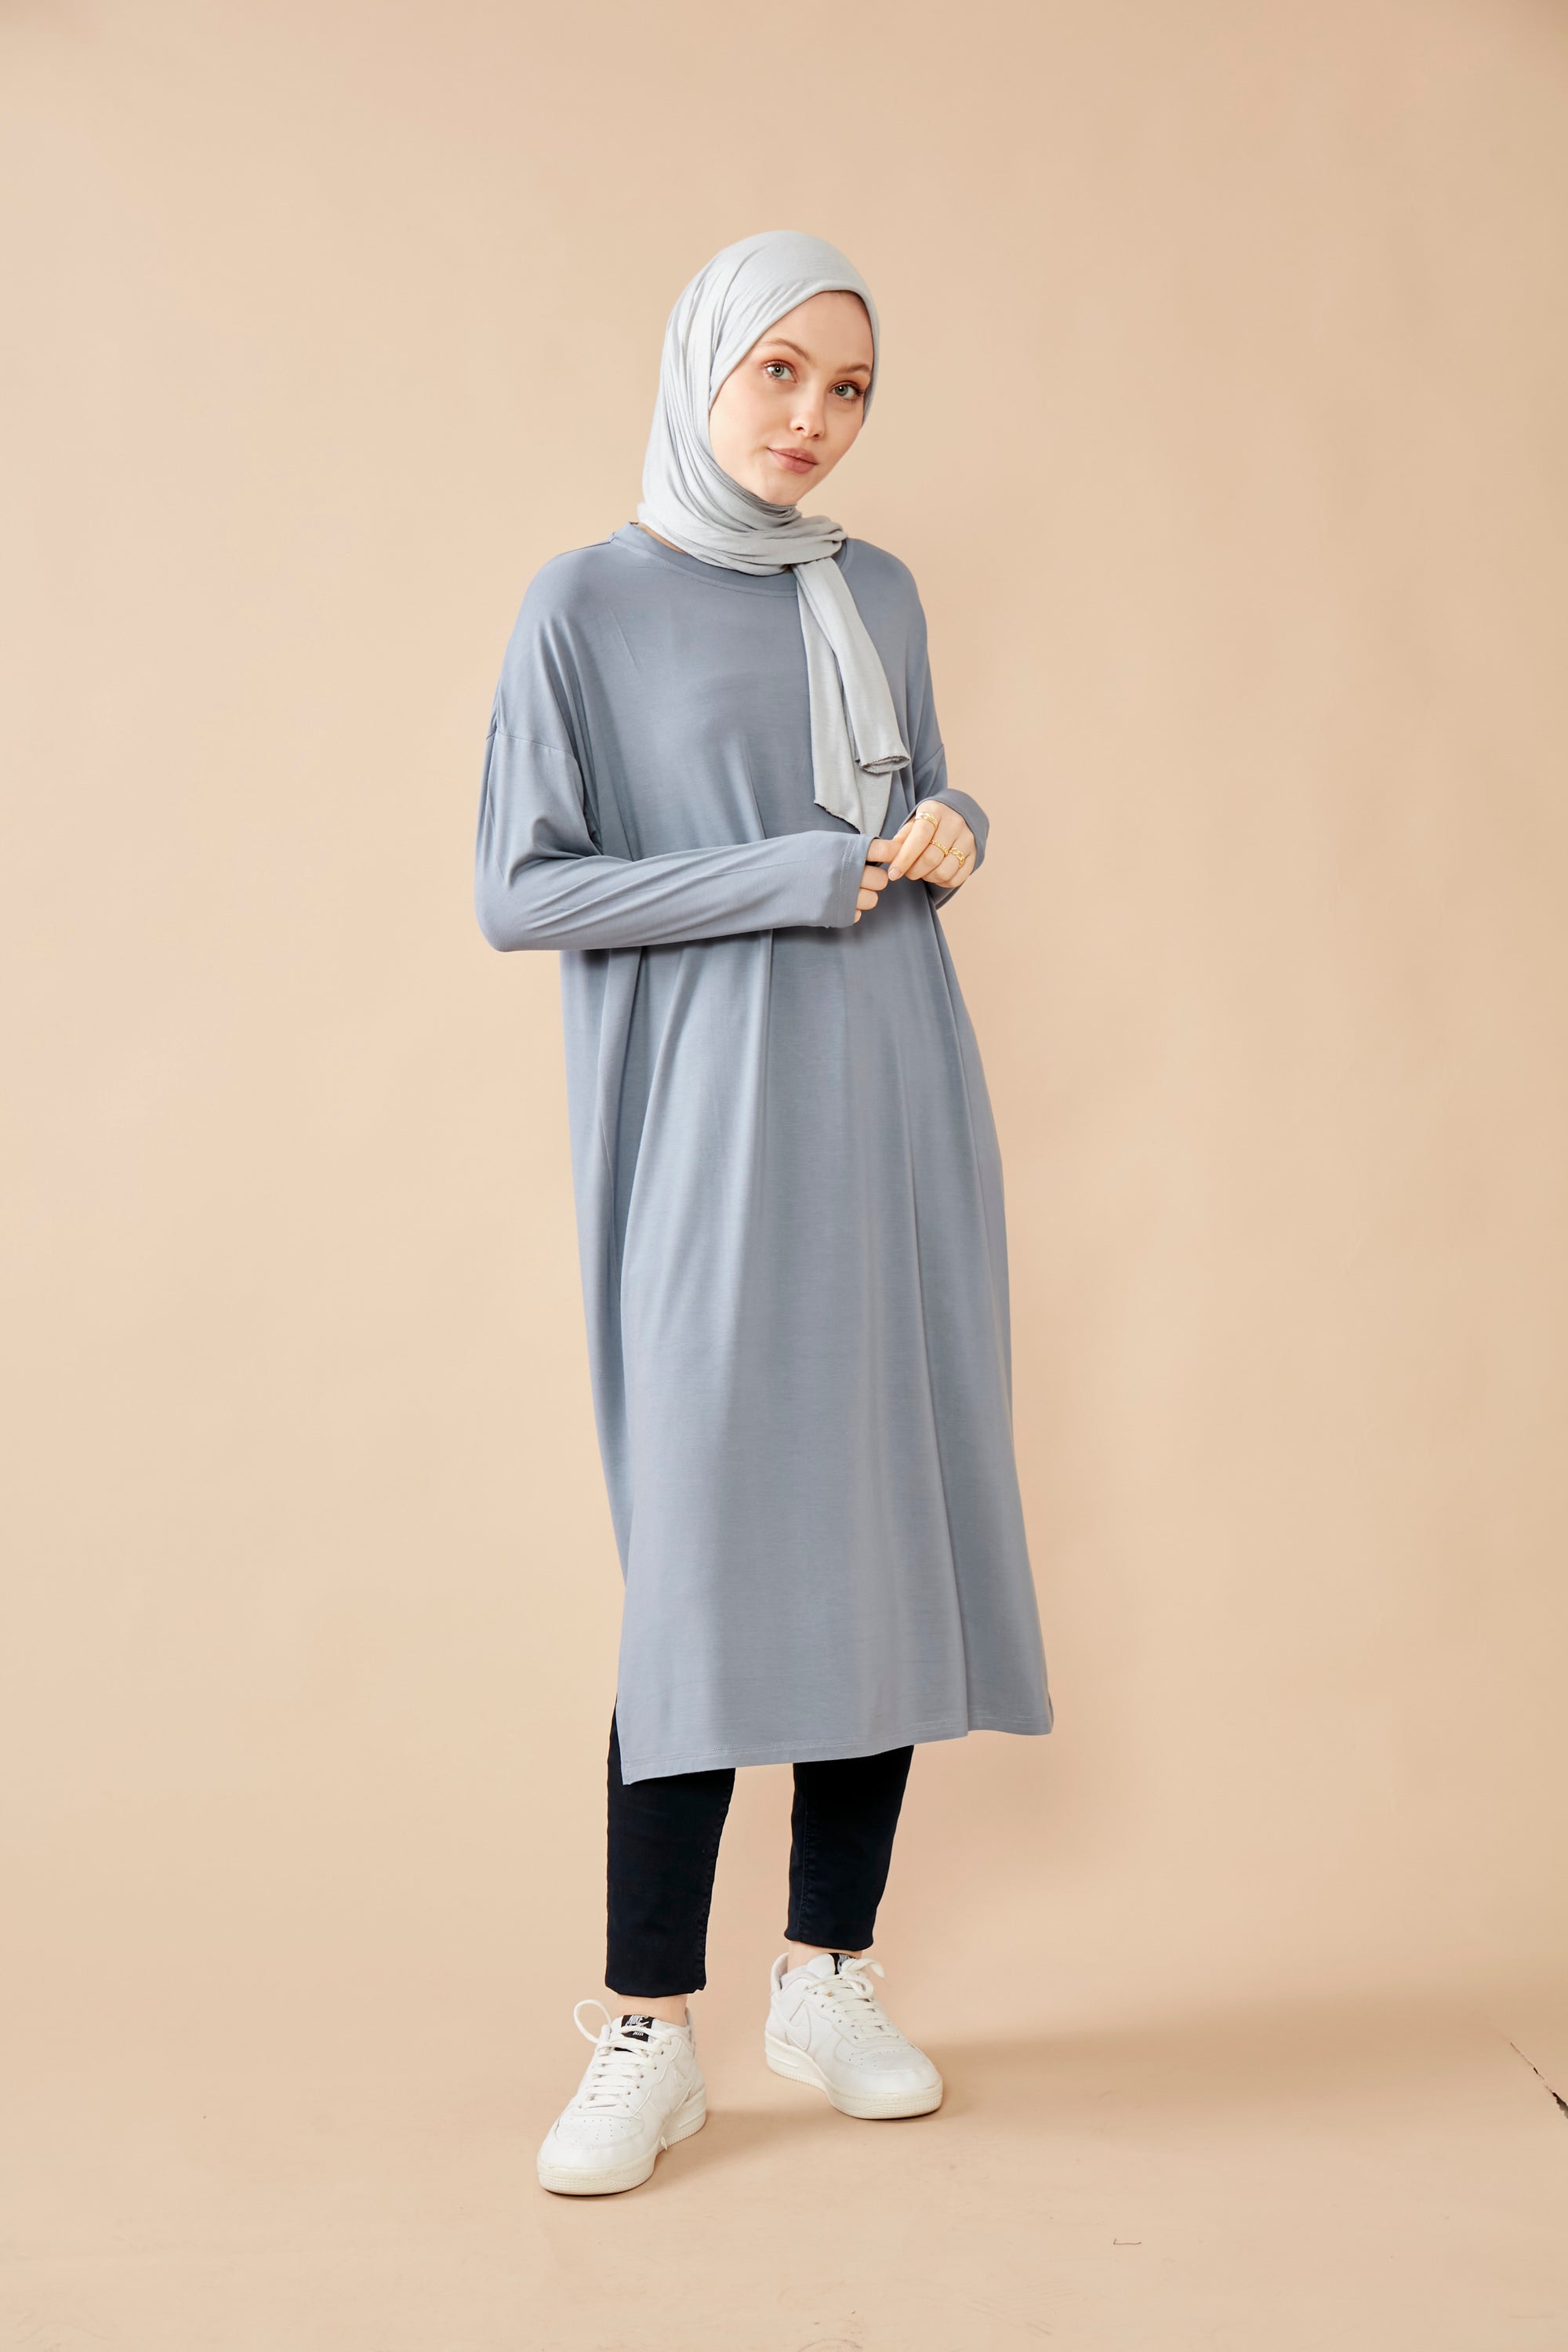 modest dresses muslim